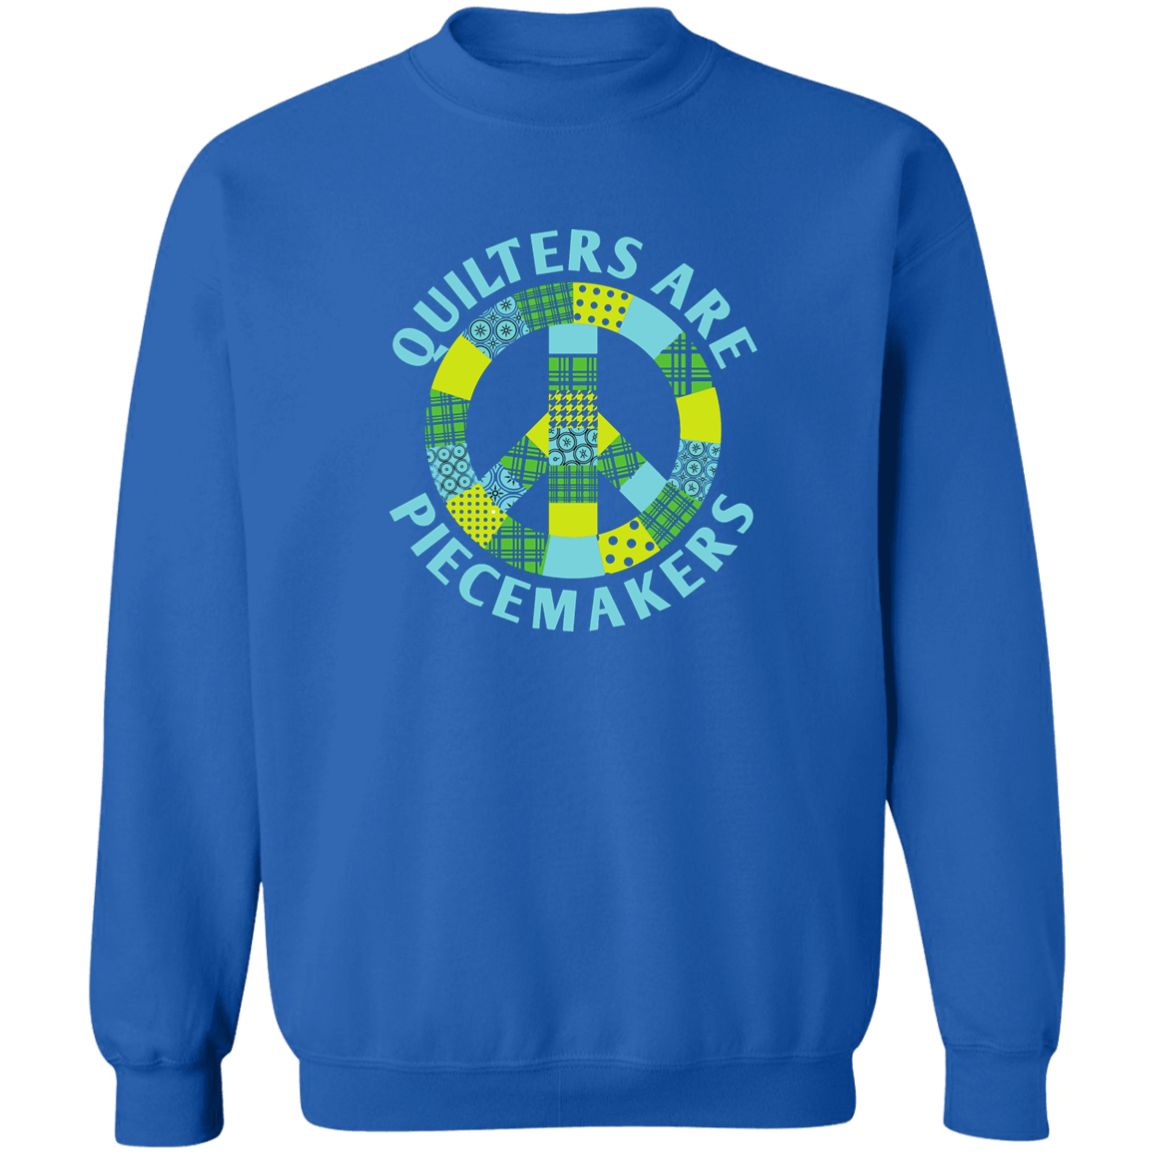 Quilters are Piecemakers Sweatshirt